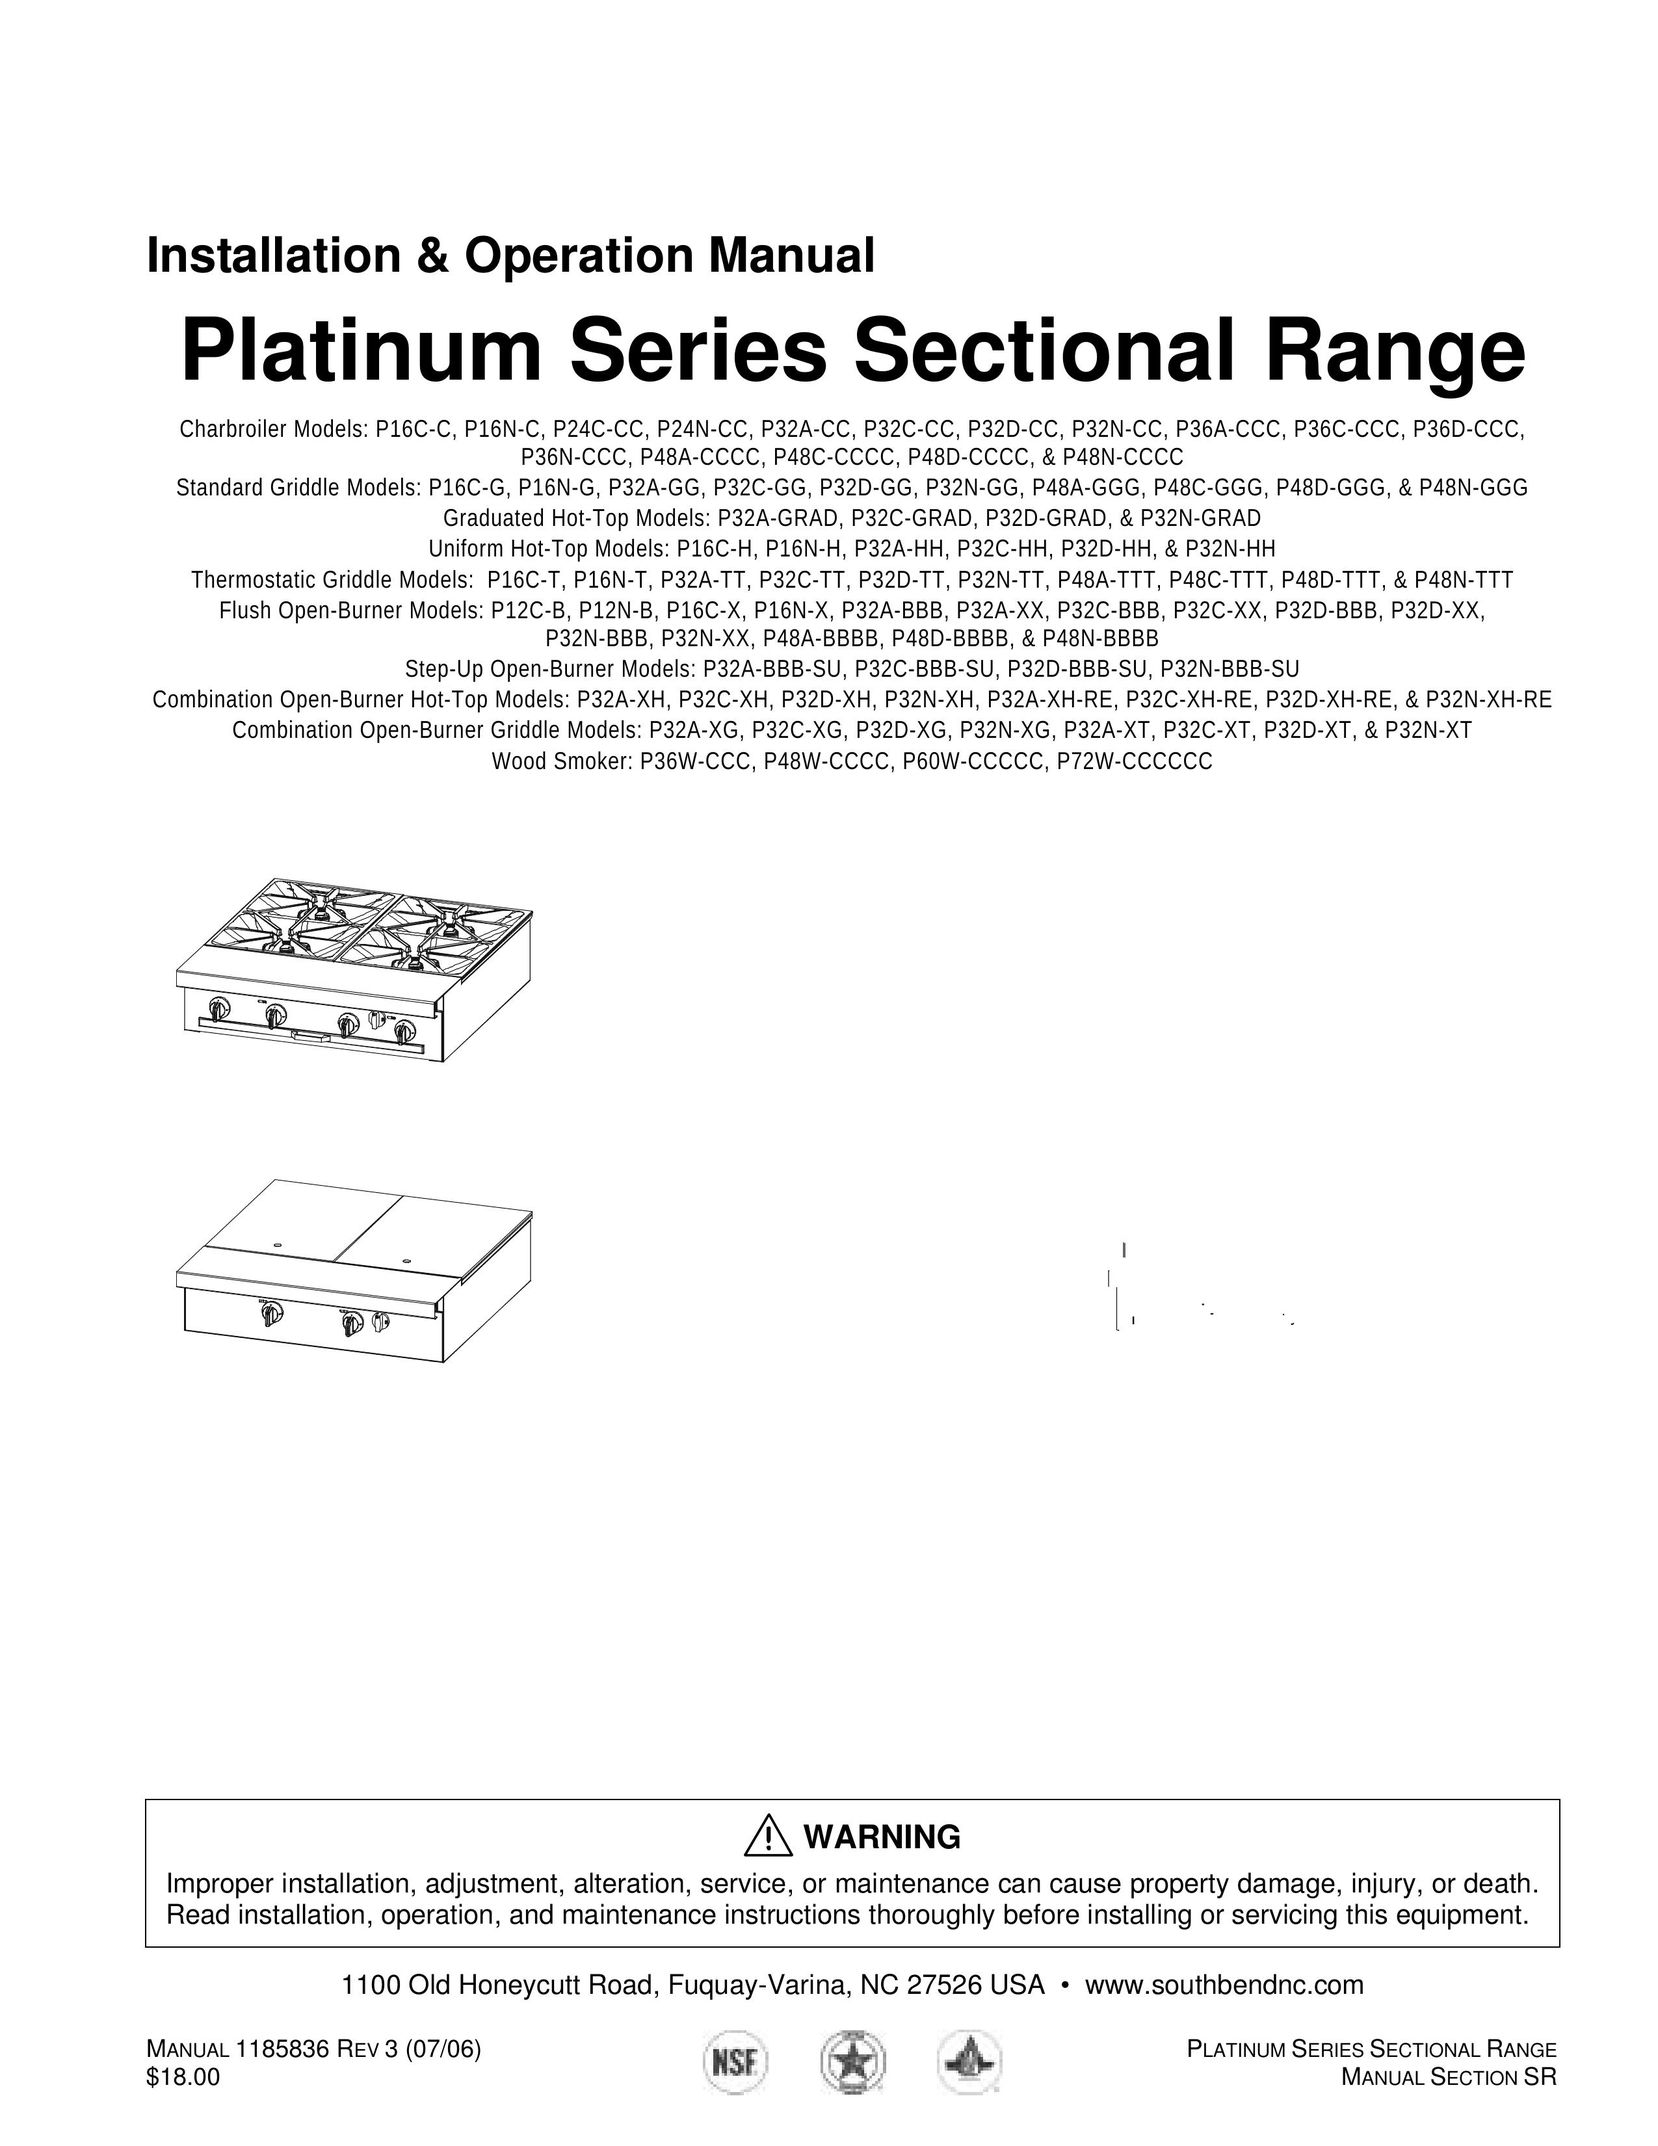 Southbend P16C-H Range User Manual